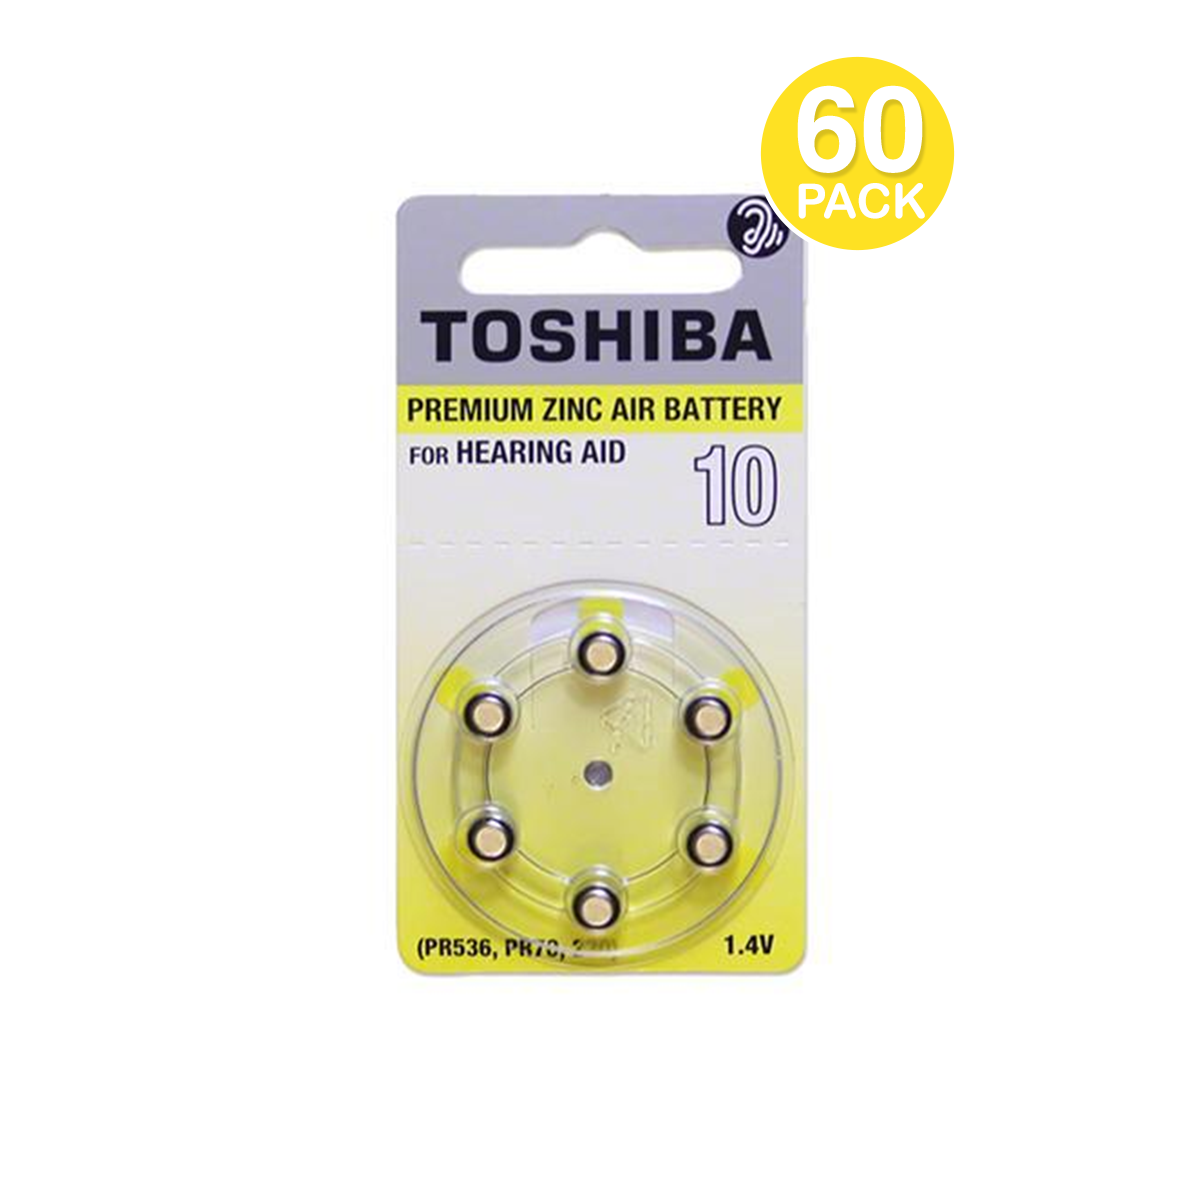 Toshiba Size 10 Hearing Aid Battery (60 pcs)  (Mercury Free)